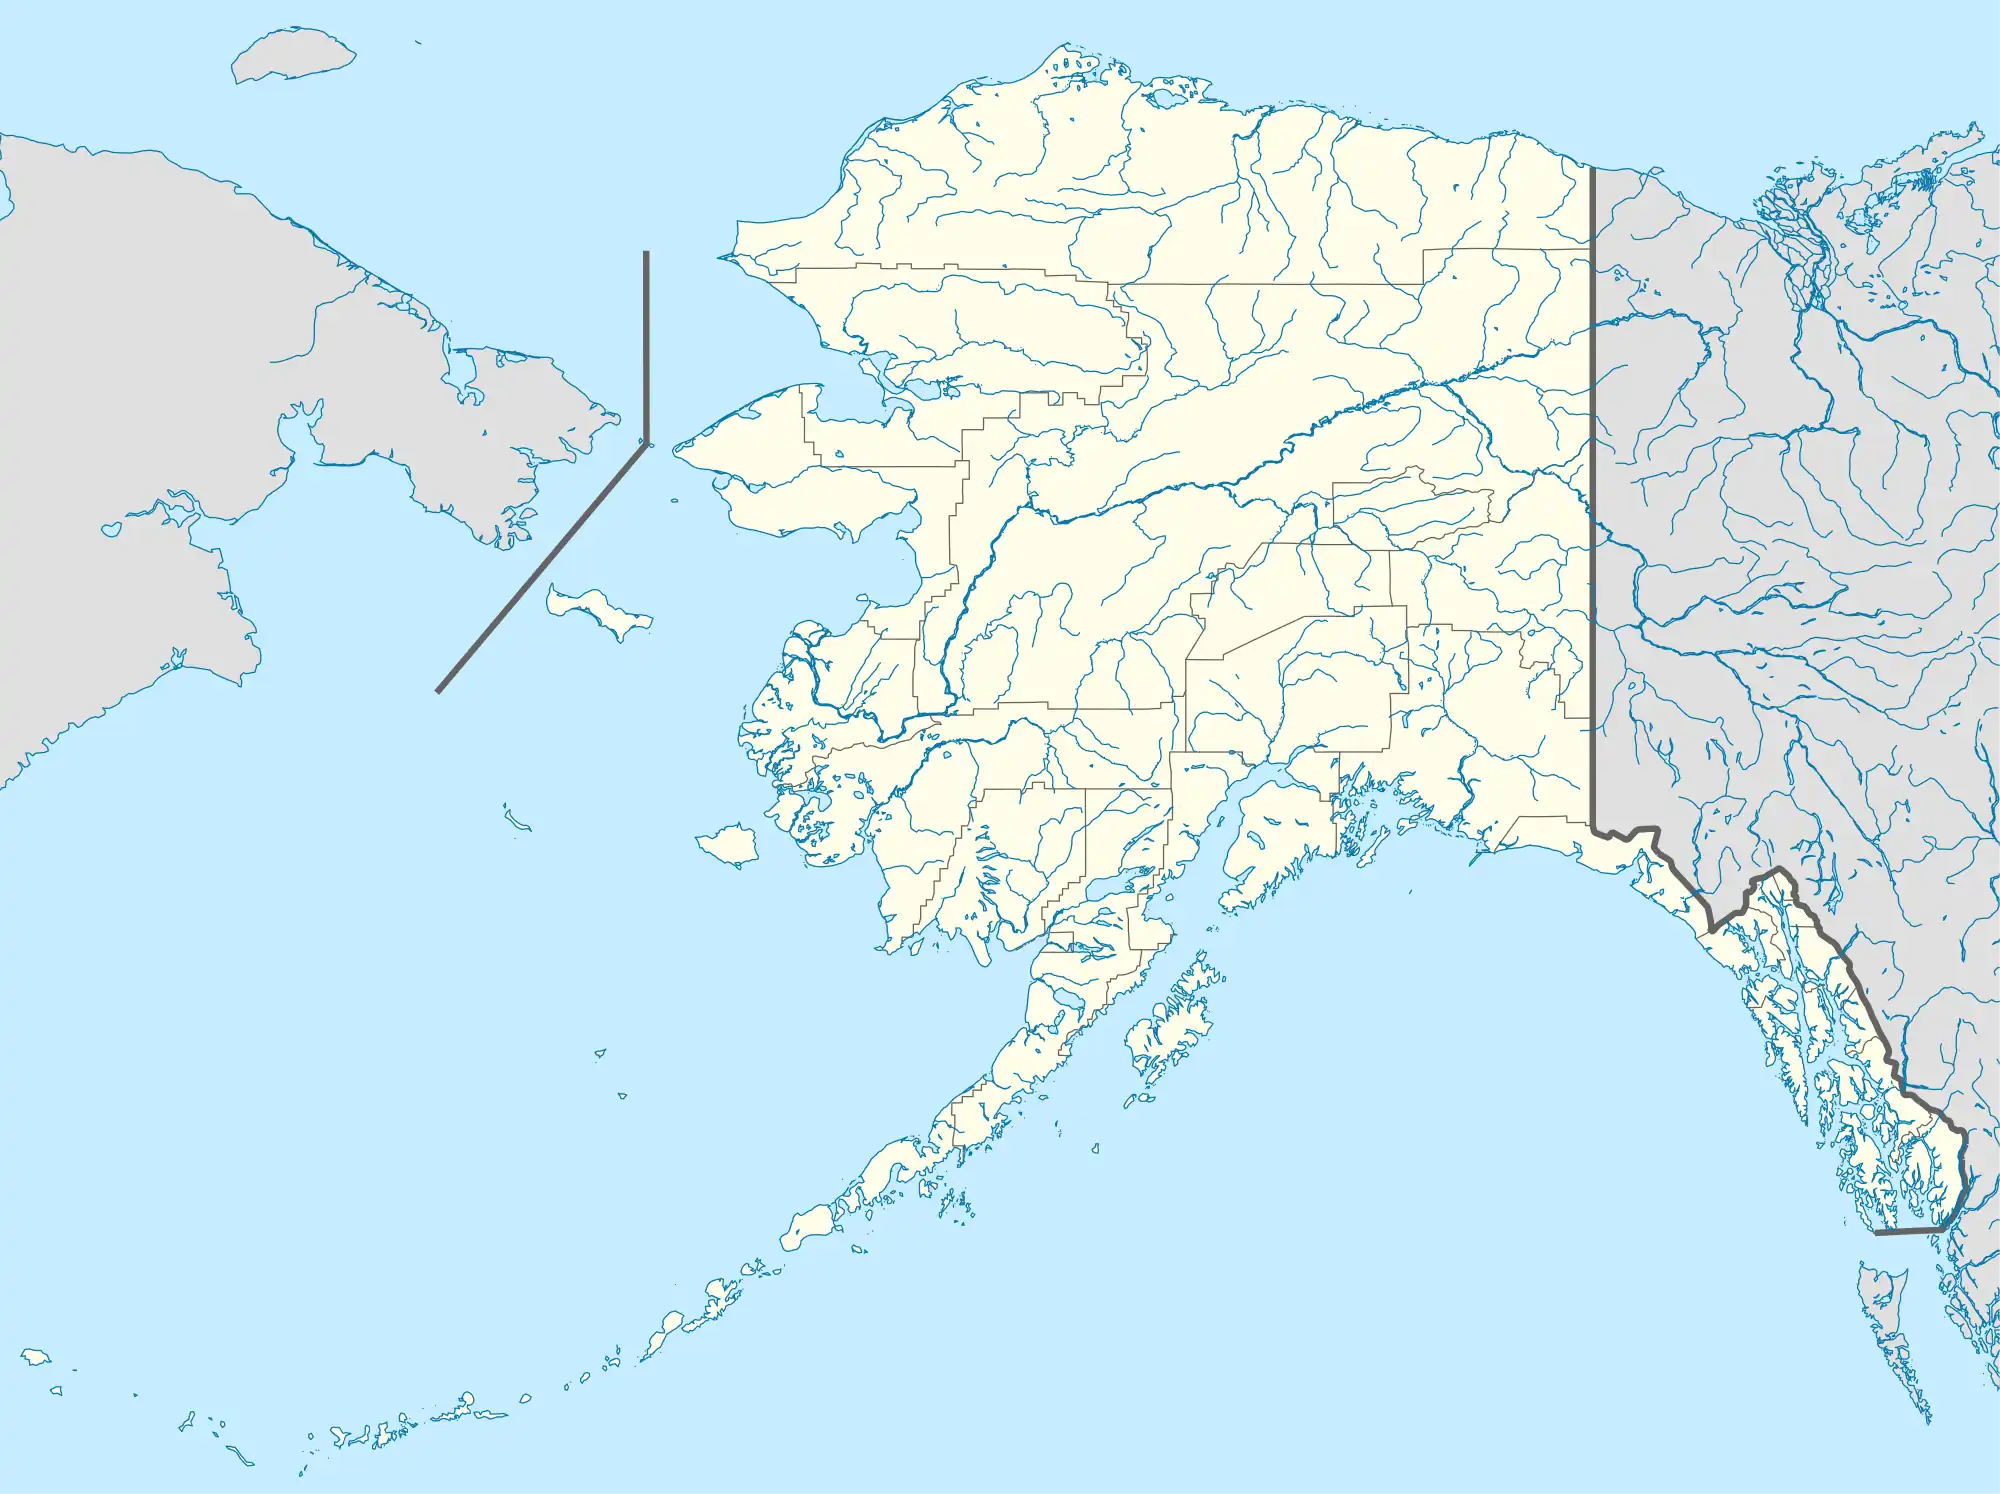 Yakutat AAF is located in Alaska